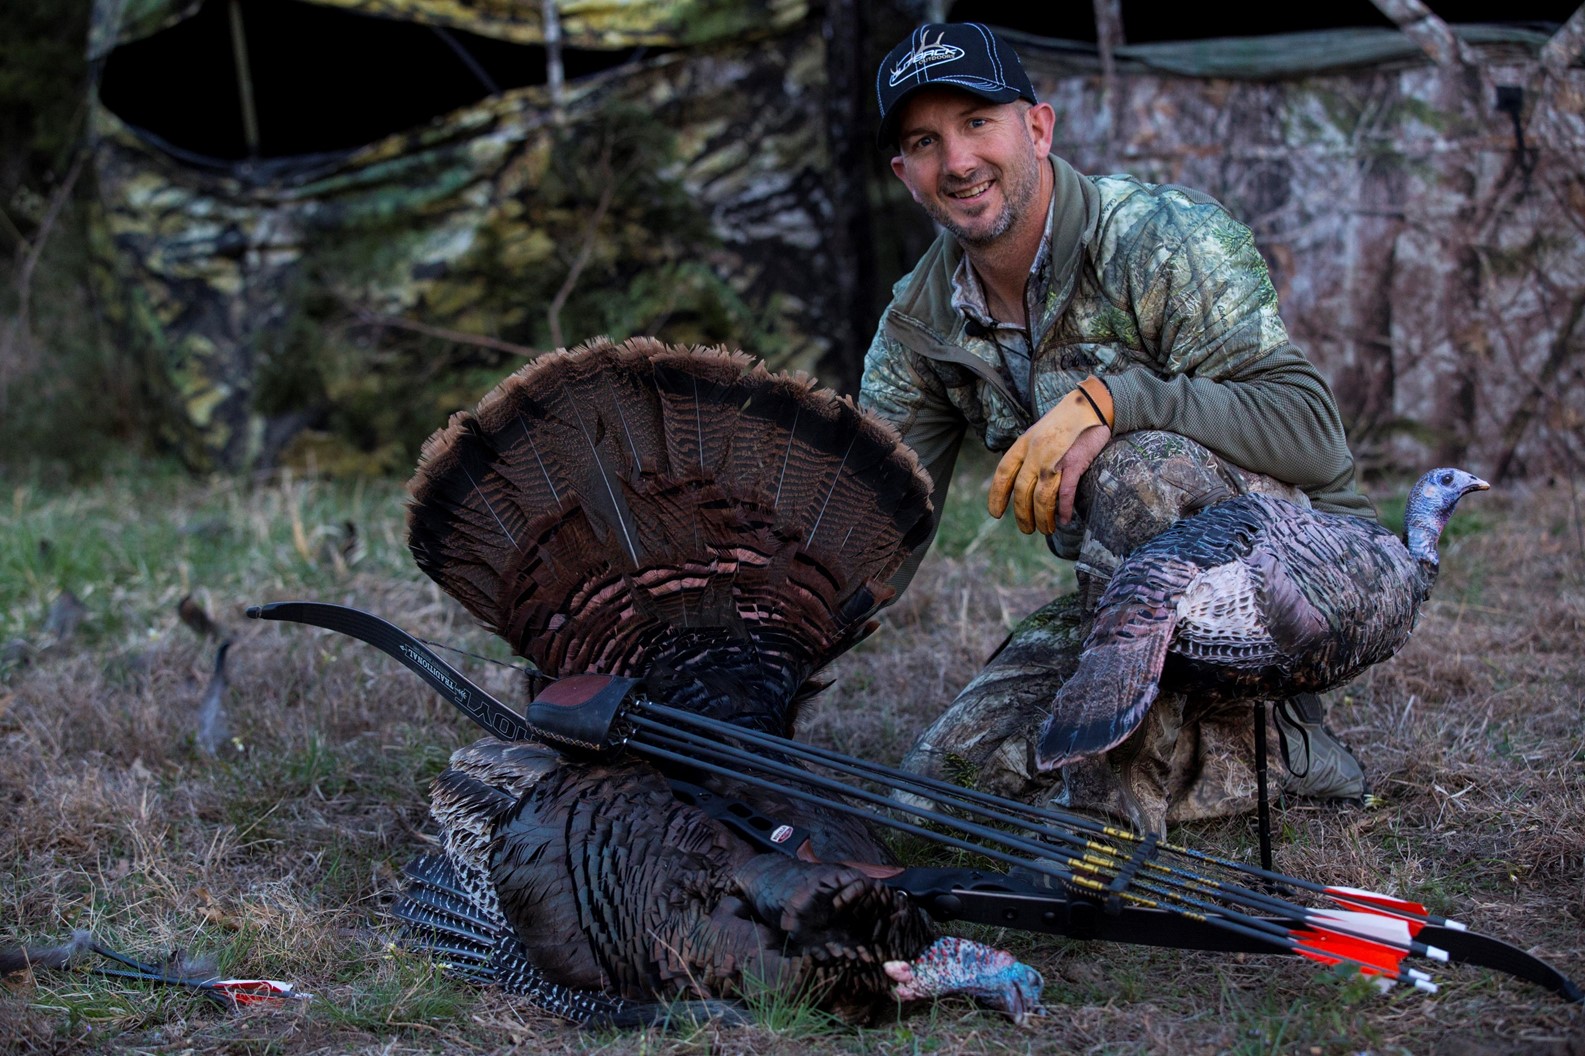 Hunter with Turkey and Broadheads